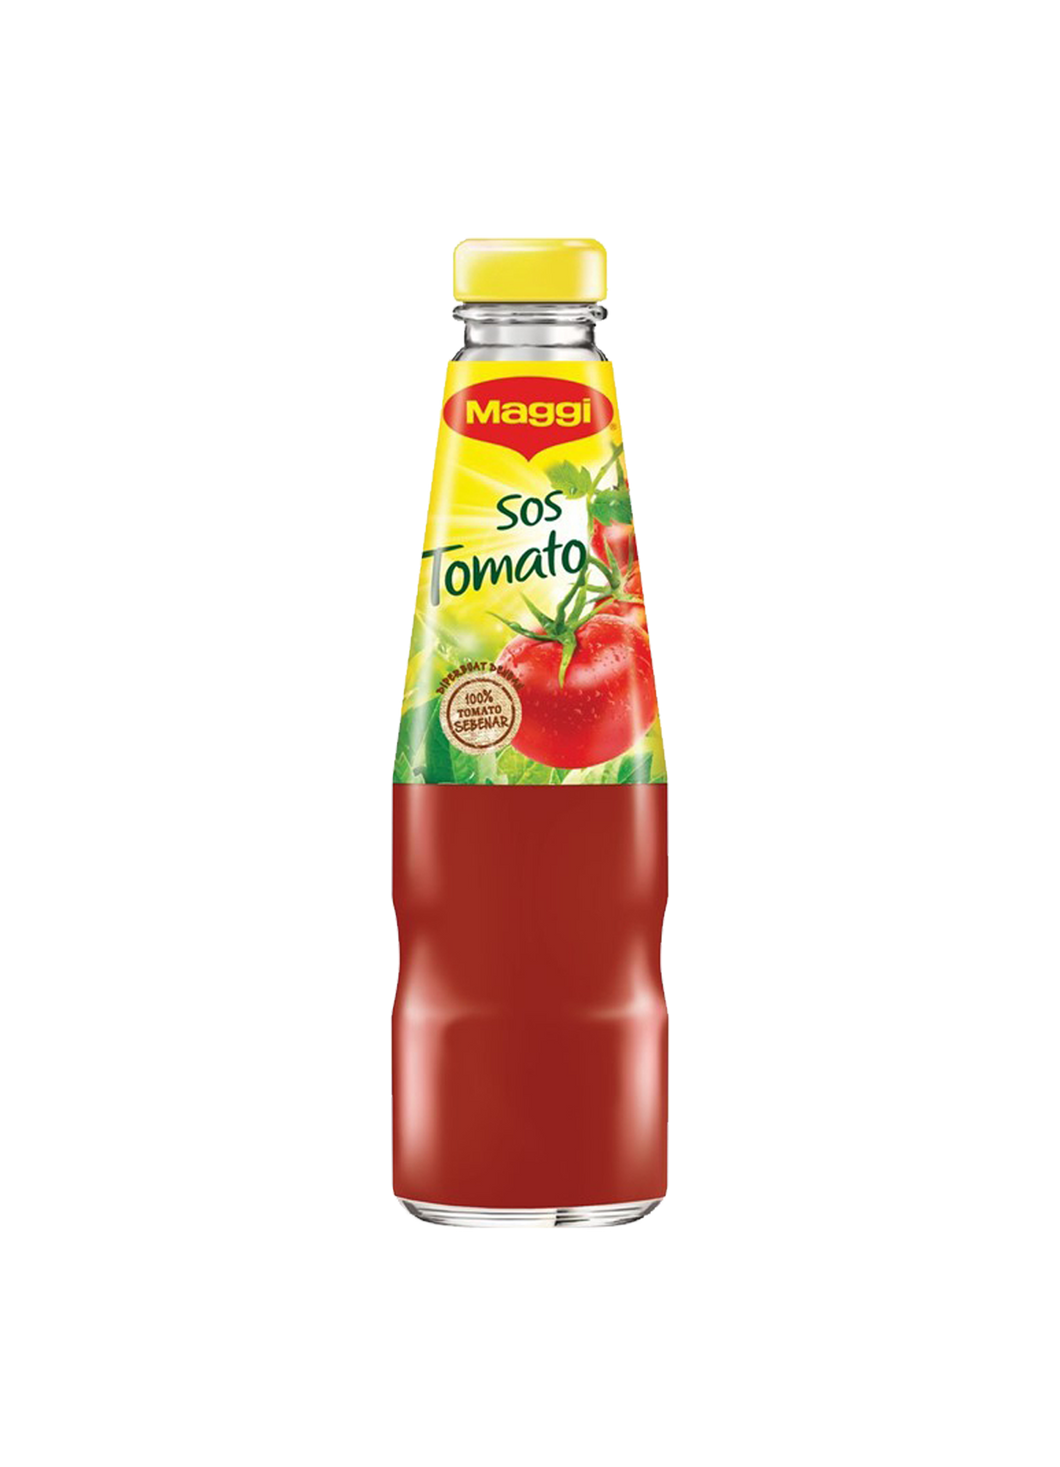 Maggi SOS Tomato Sauce 325g